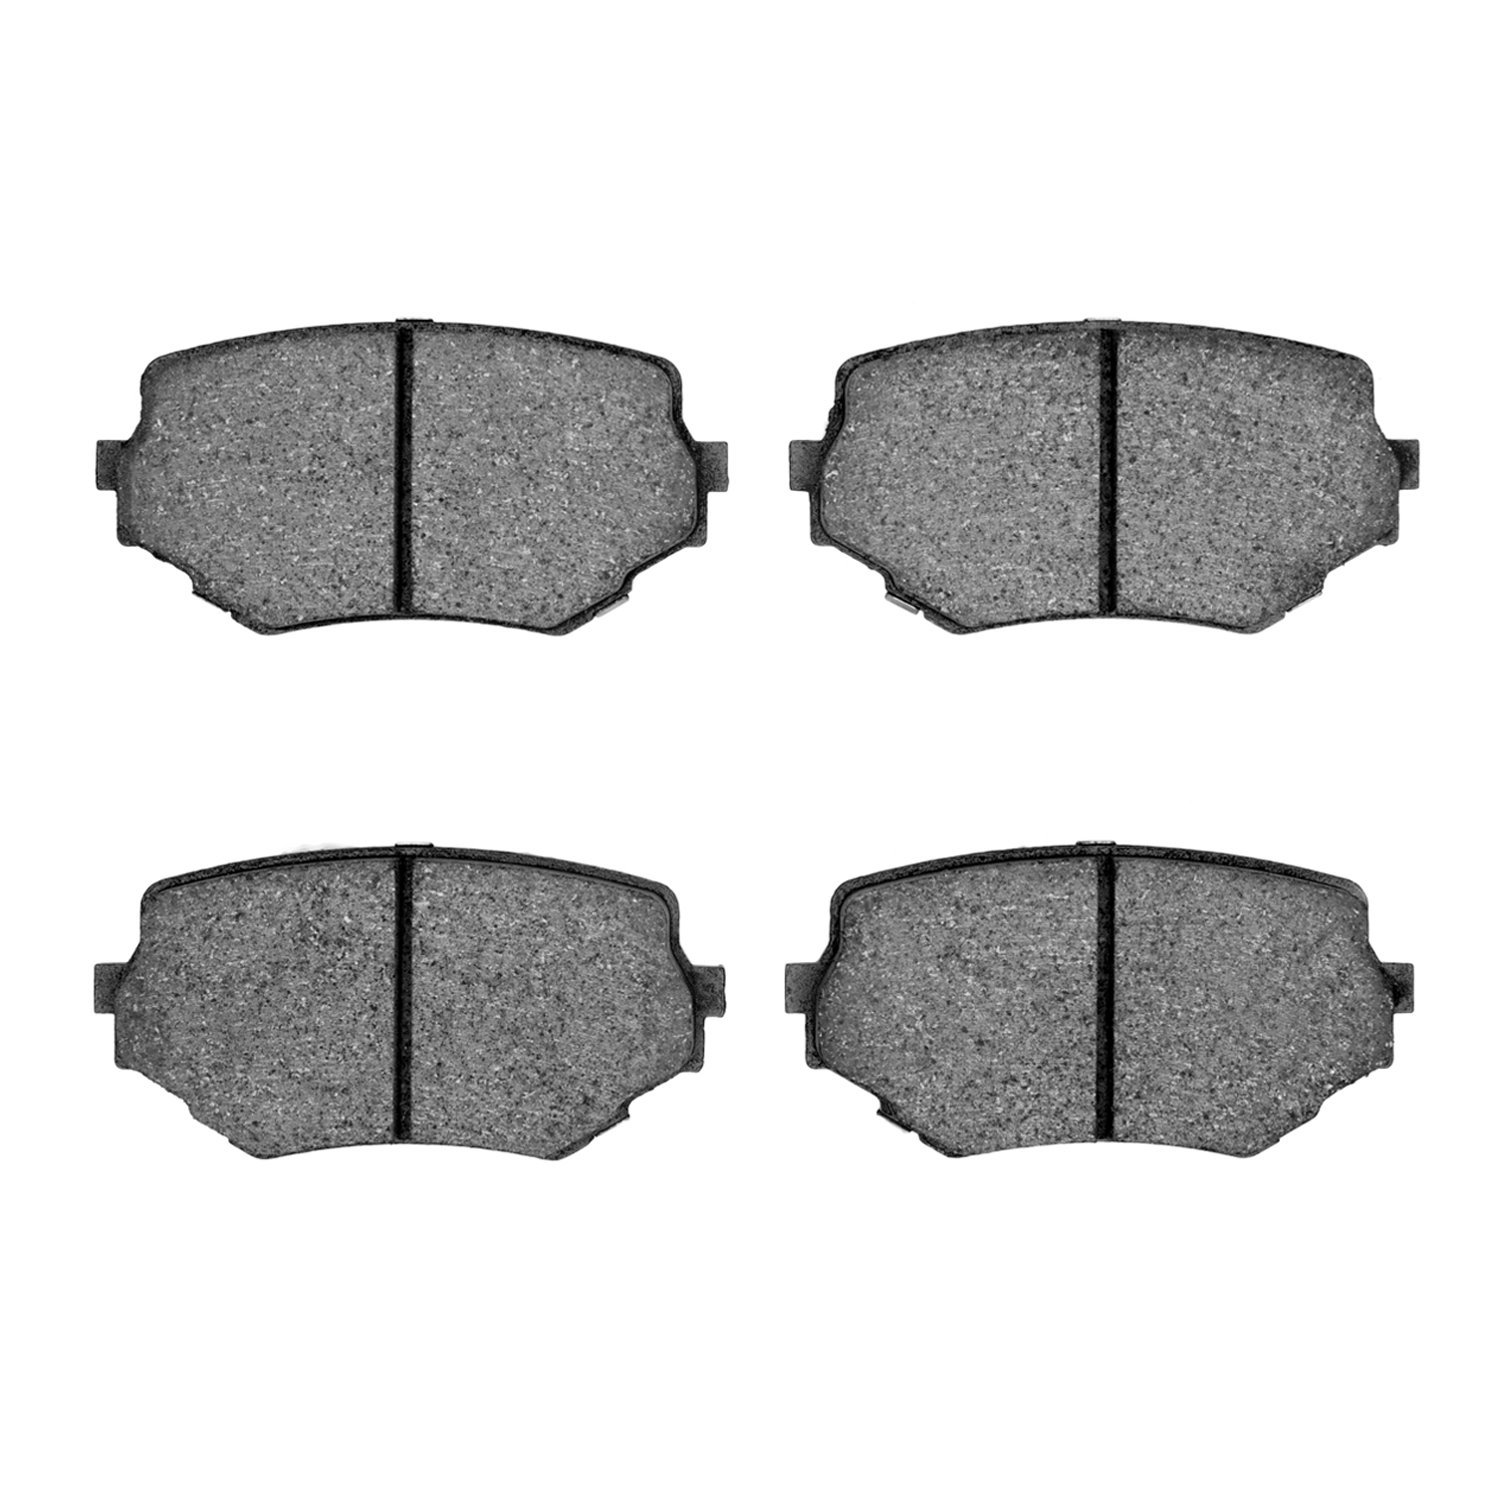 1551-0680-00 5000 Advanced Ceramic Brake Pads, 1996-2008 Multiple Makes/Models, Position: Front